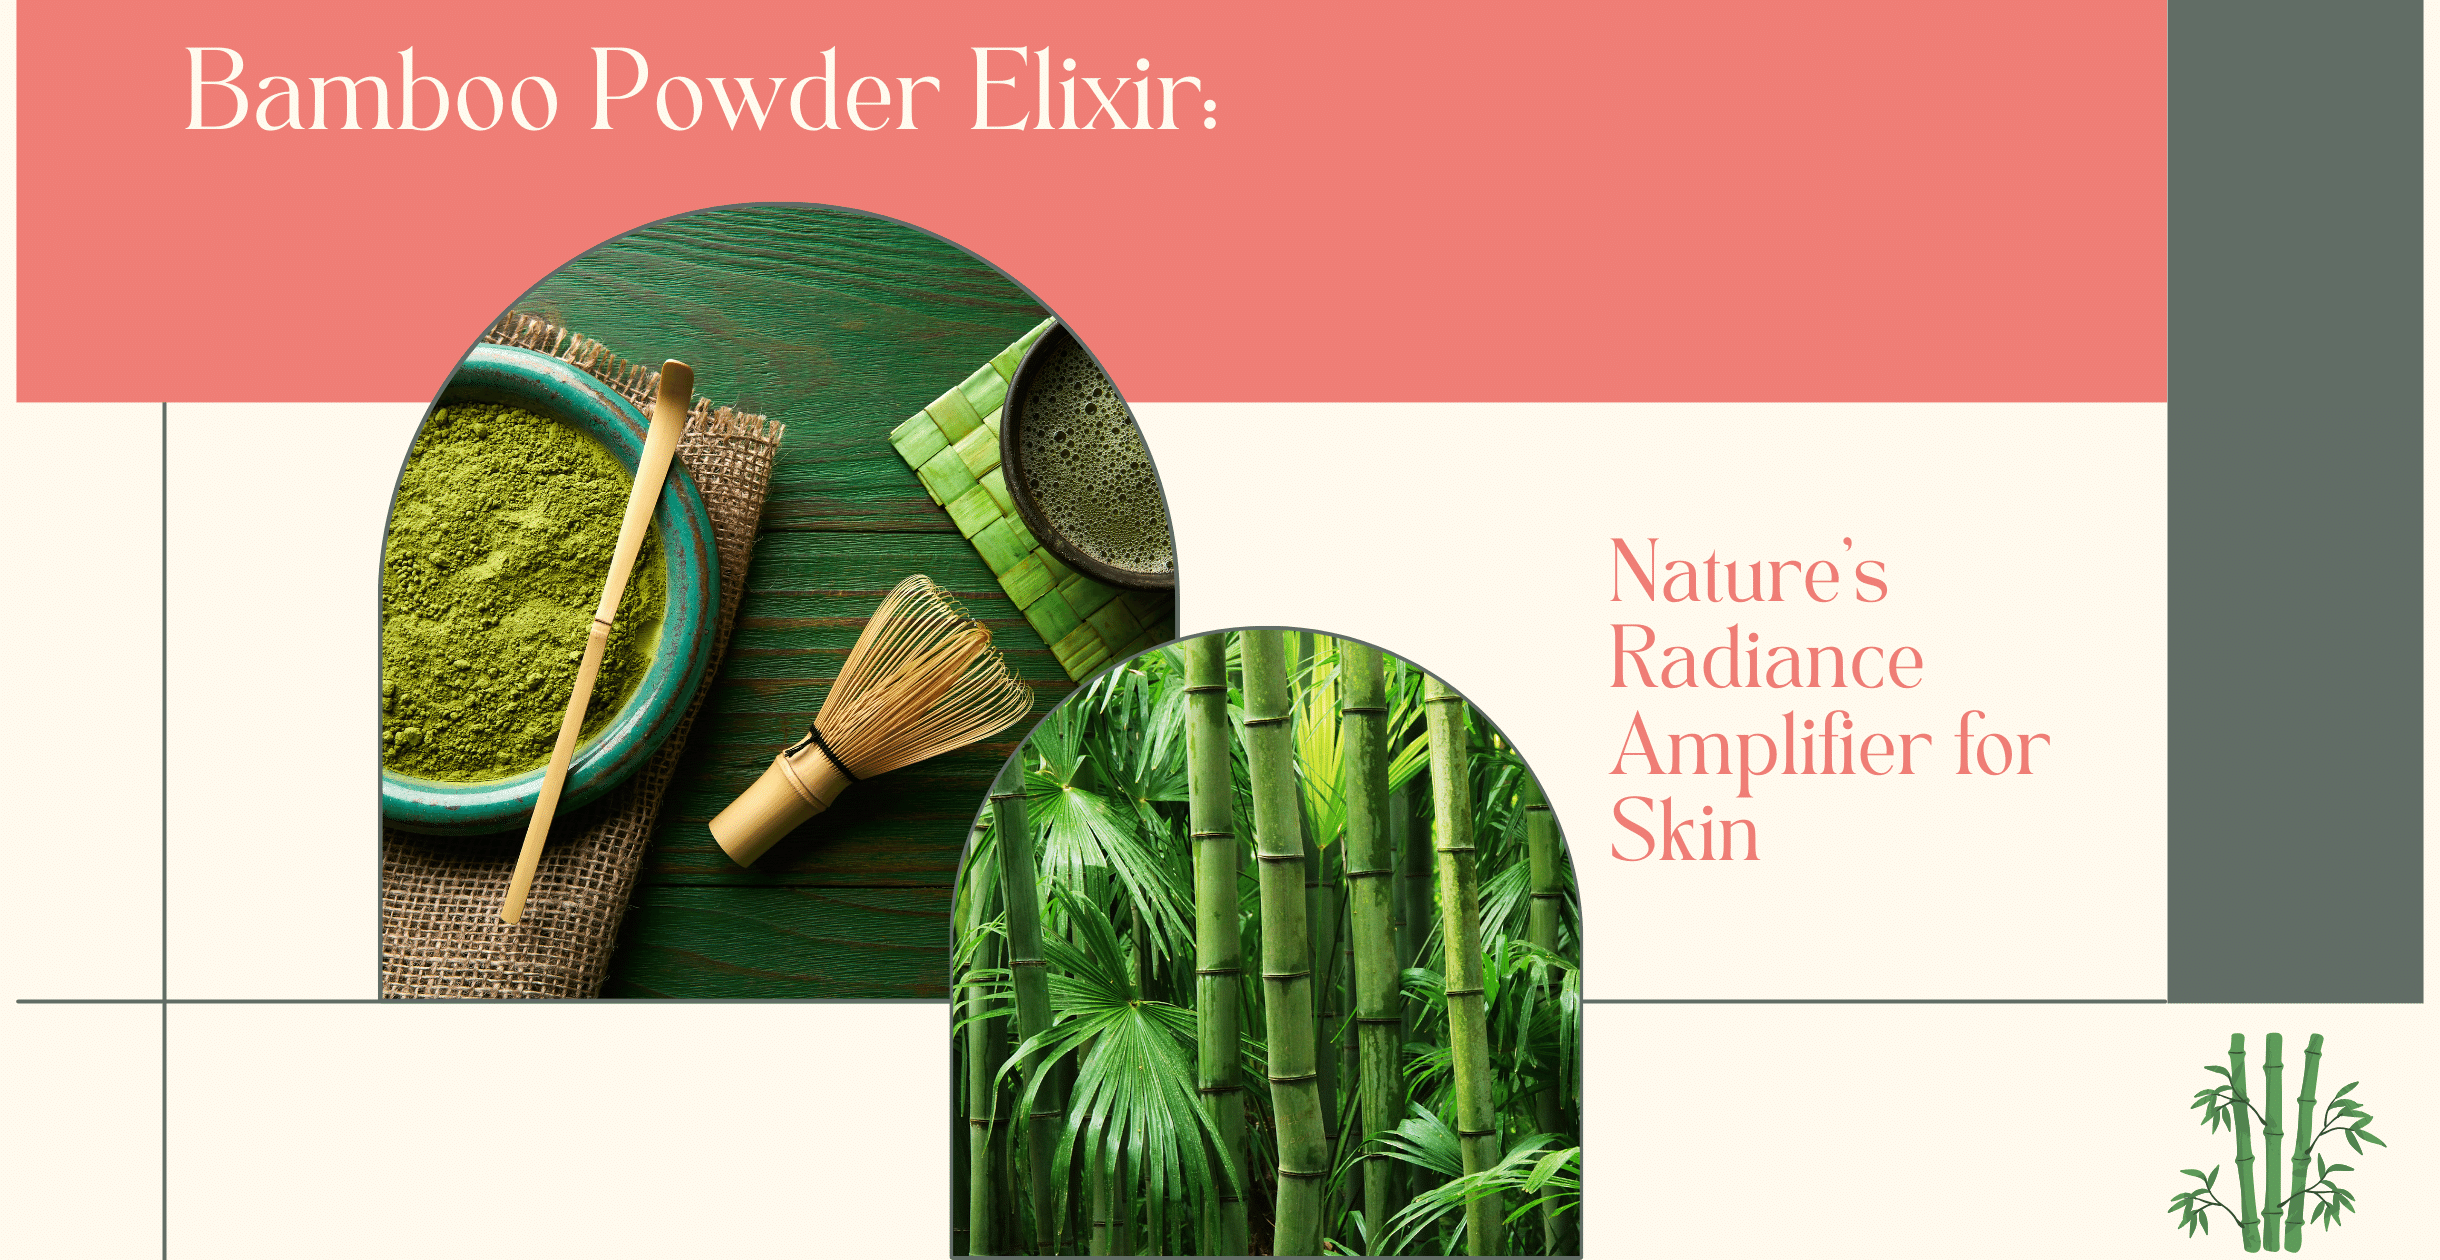 Bamboo Powder Elixir: Nature's Radiance Amplifier for Skin